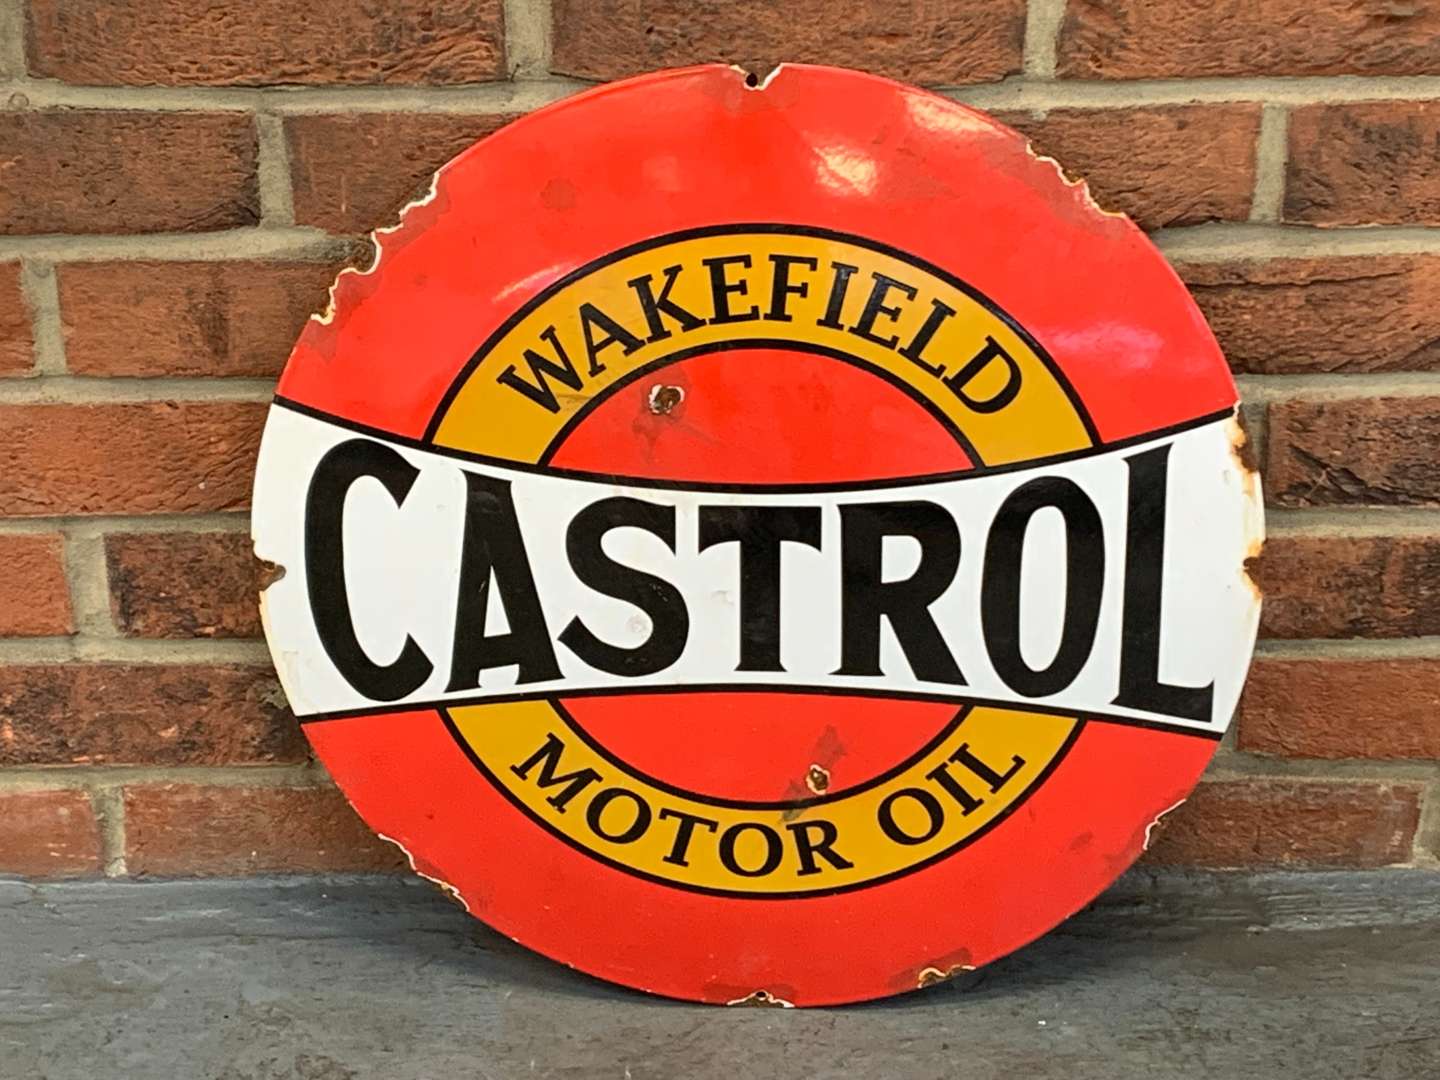 <p>Castrol Motor Oil Enamel Circular Convex Sign</p>